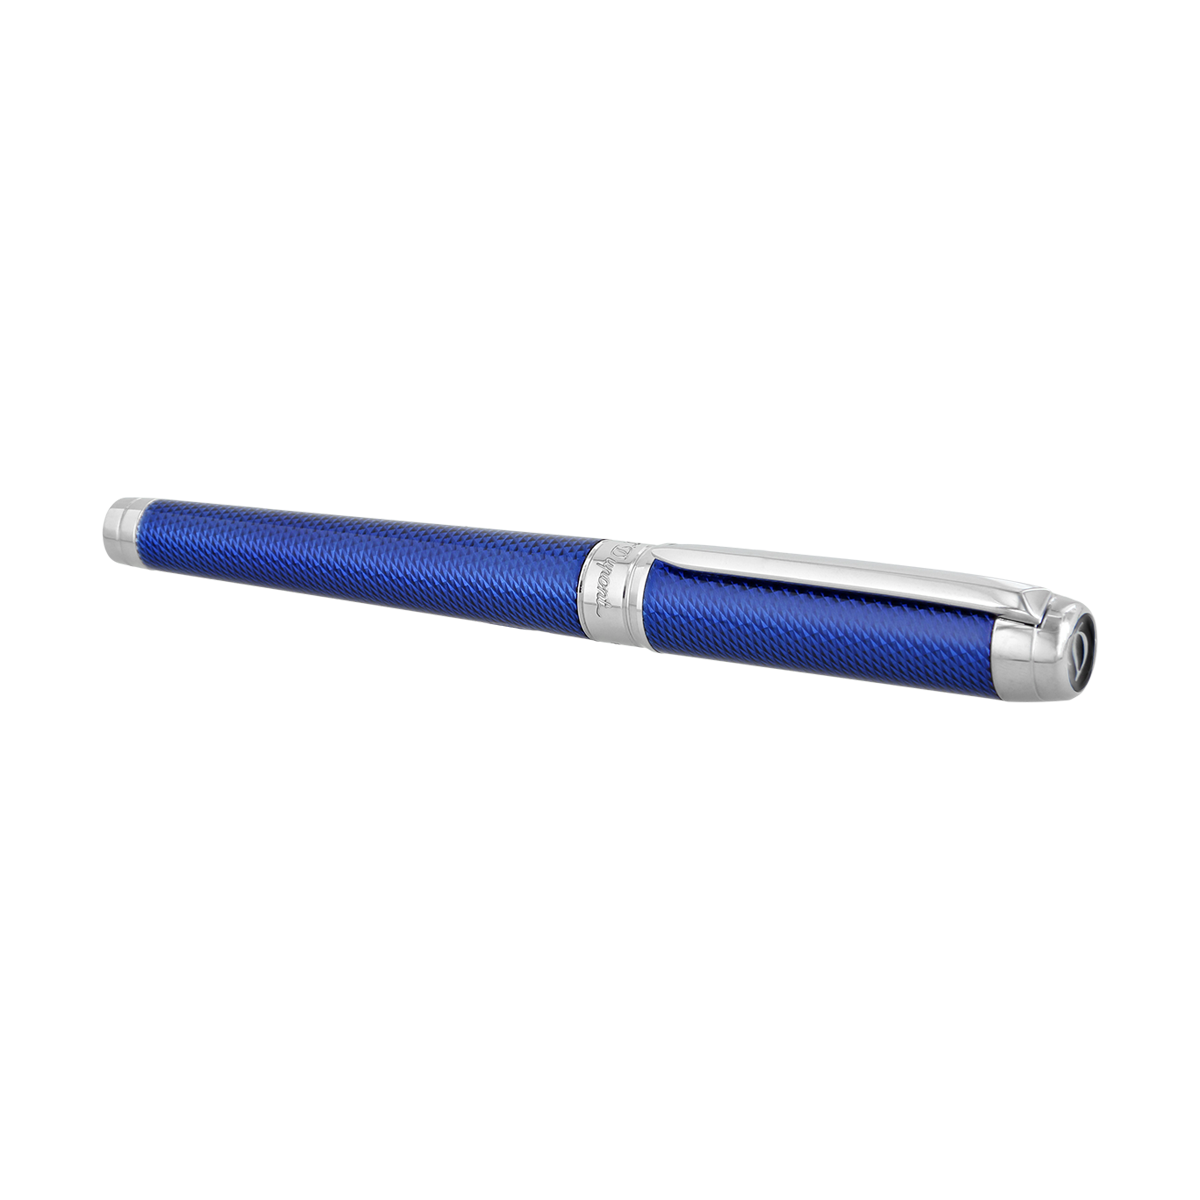 Ручка-роллер Eternity Line D 422011XL Цвет Синий Отделка палладием и лаком | S.T. Dupont